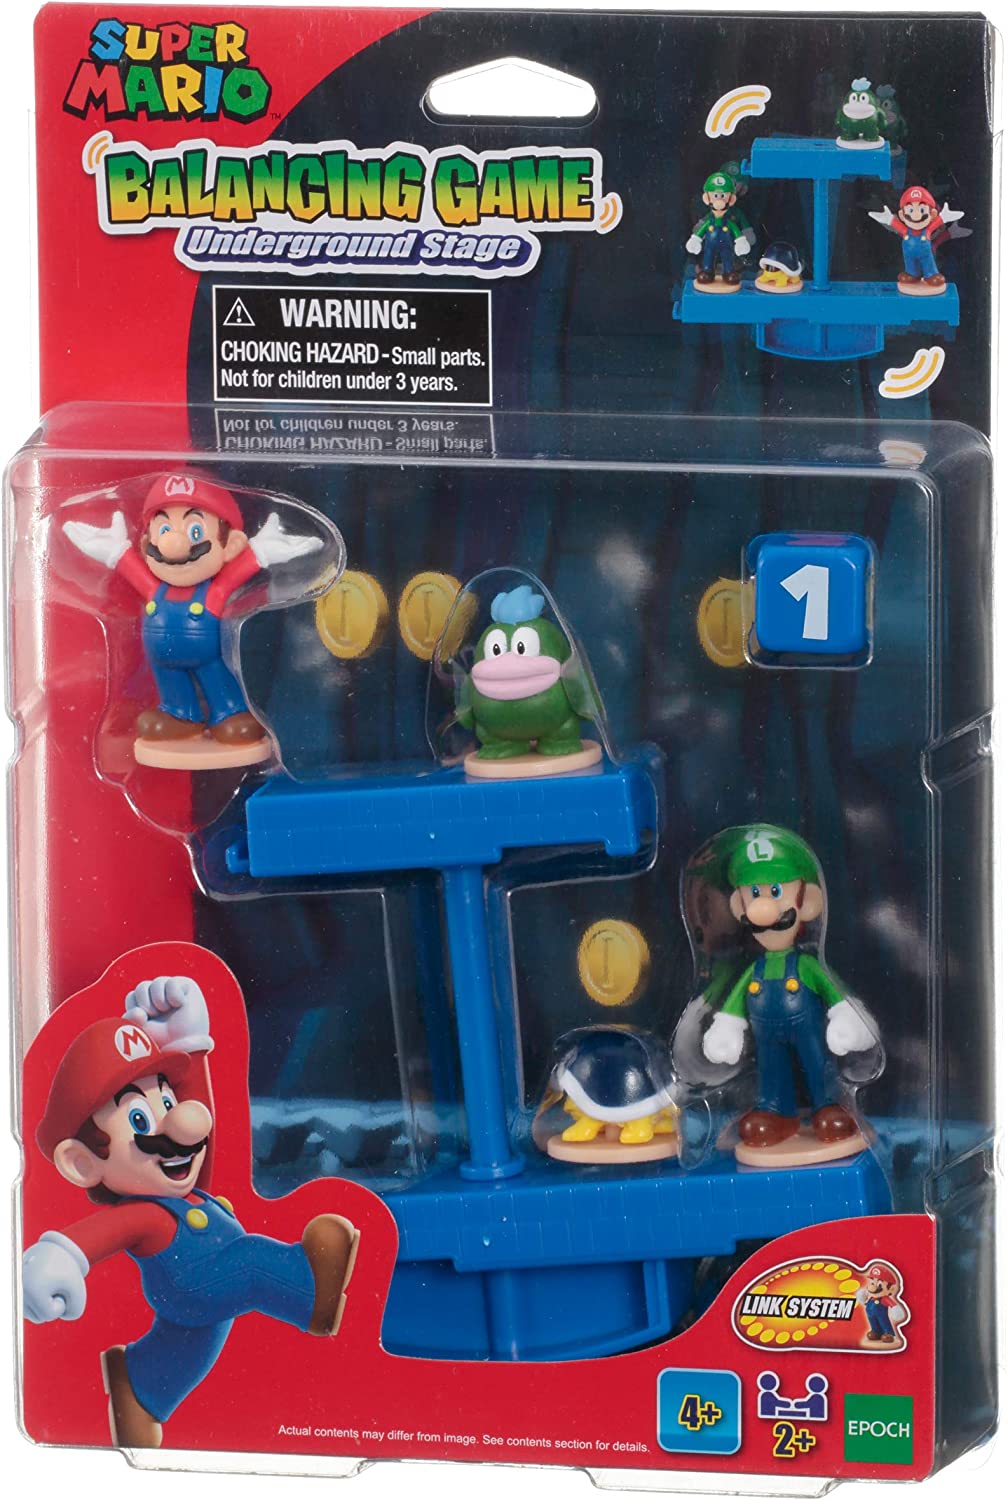 Super Mario Balancing Game Asst: Ground Stage